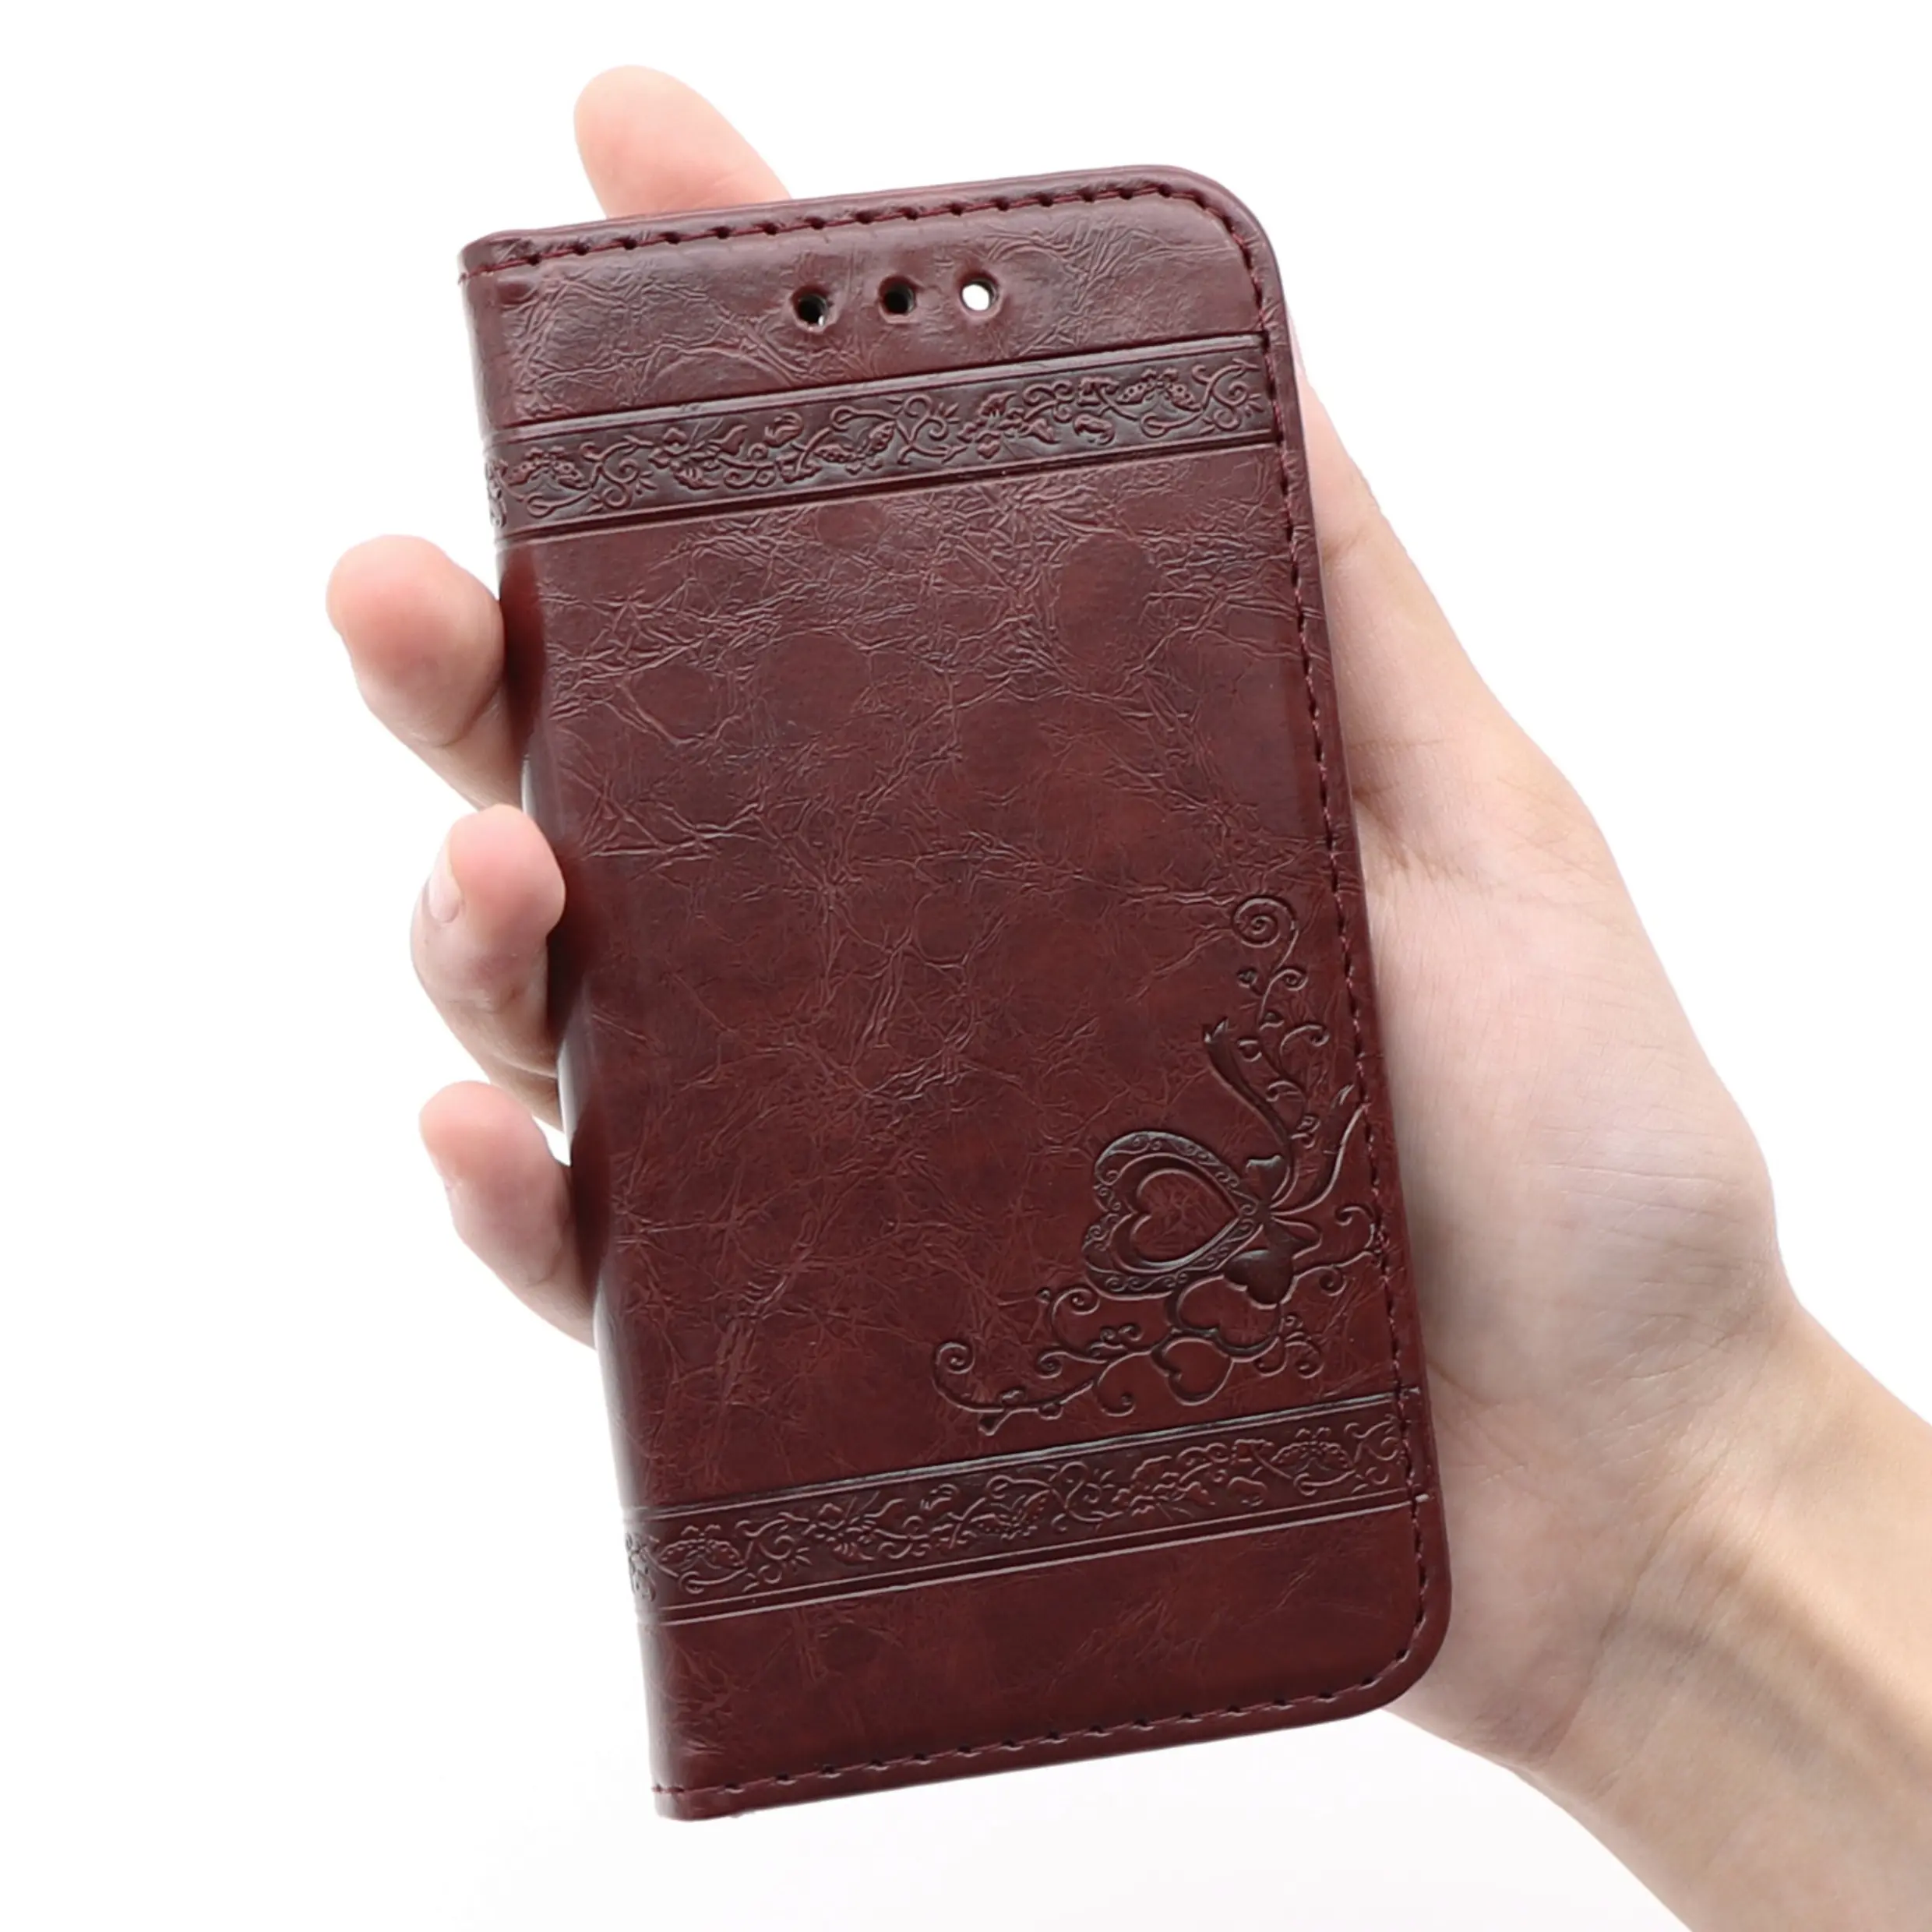 9 kleur PU Flip Leather Magnetische Wallet Mobiele Telefoon Case Met Card Slot voor iPhone 4/5/6 /6 plus/7/7 plus/8/8 plus/X/Xs/XR/ X Max